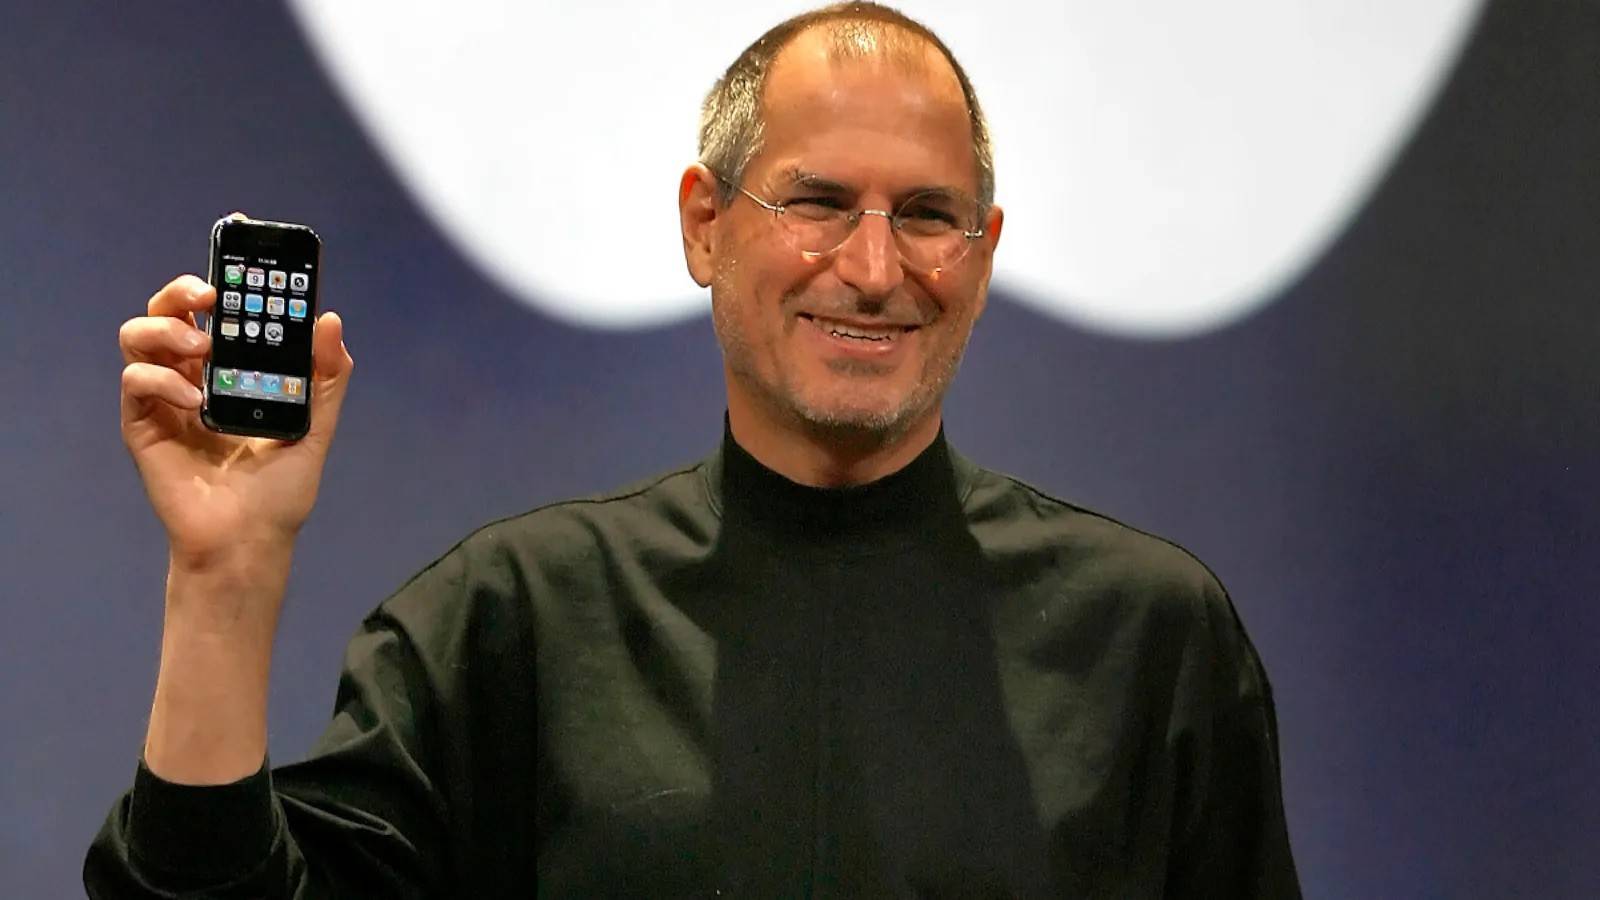 Steve Jobs 2007 iPhone event